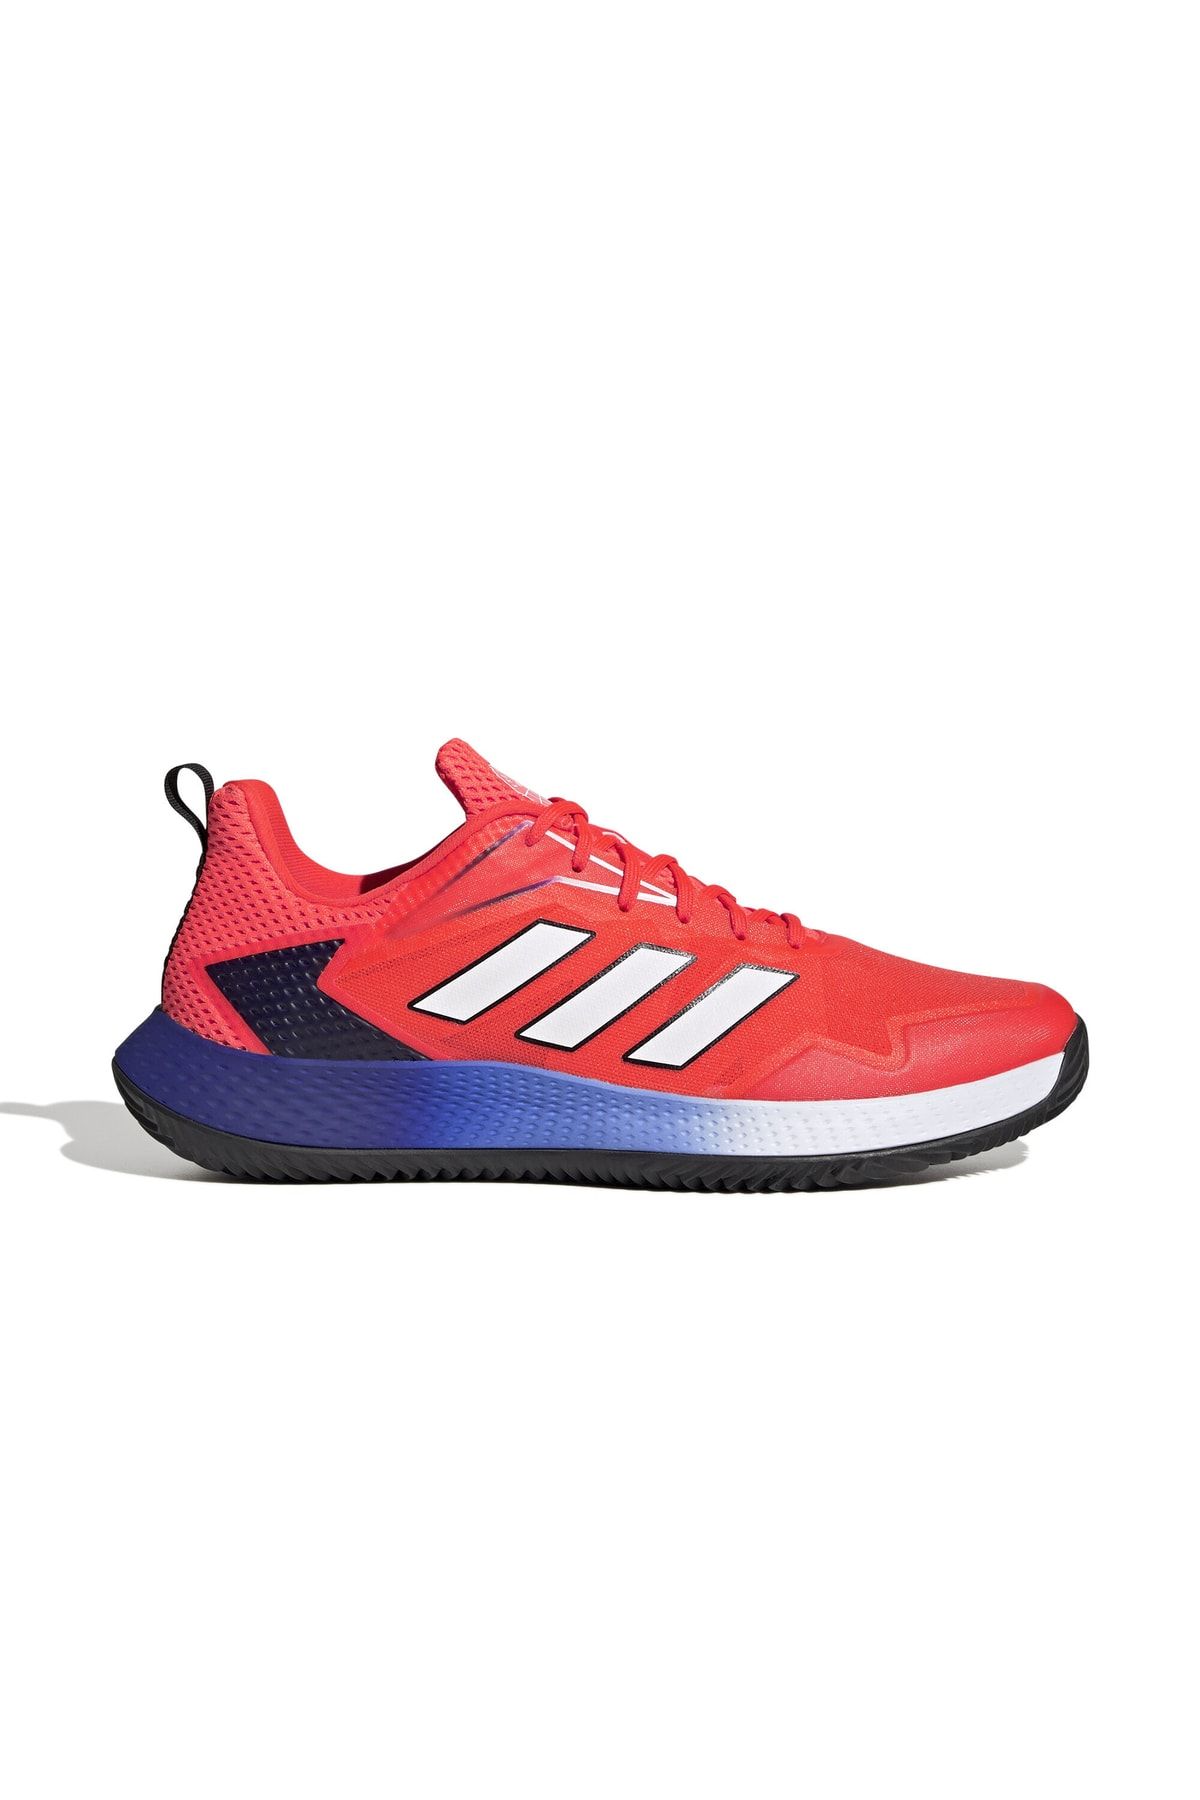 adidas Defiant Speed M Clay Erkek Tenis Ayakkabısı Hq8452 Kırmızı